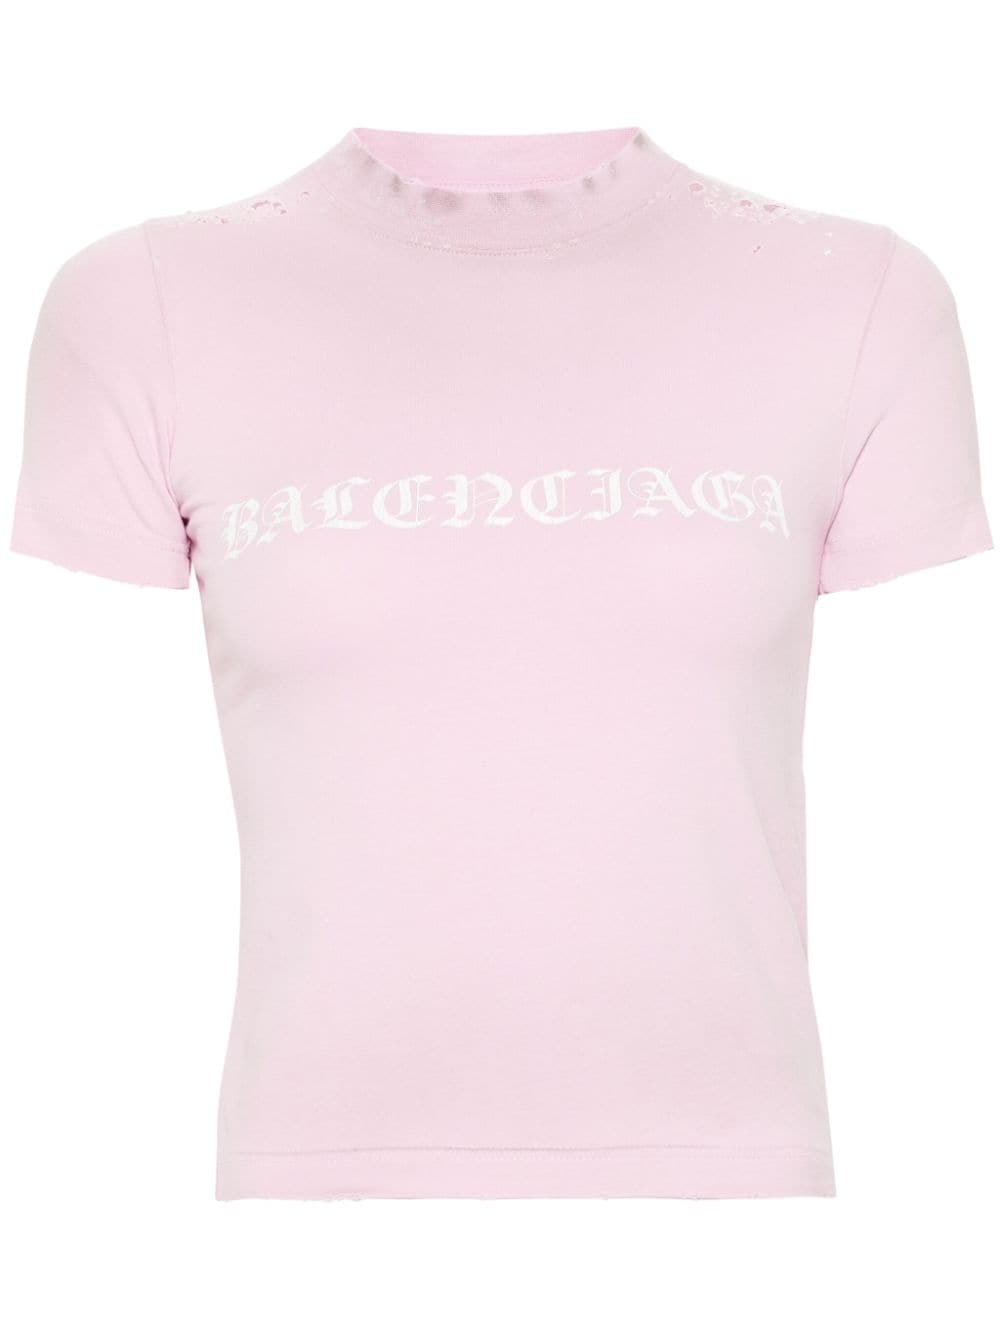 Balenciaga Gothic Type distressed T-Shirt - Pink von Balenciaga